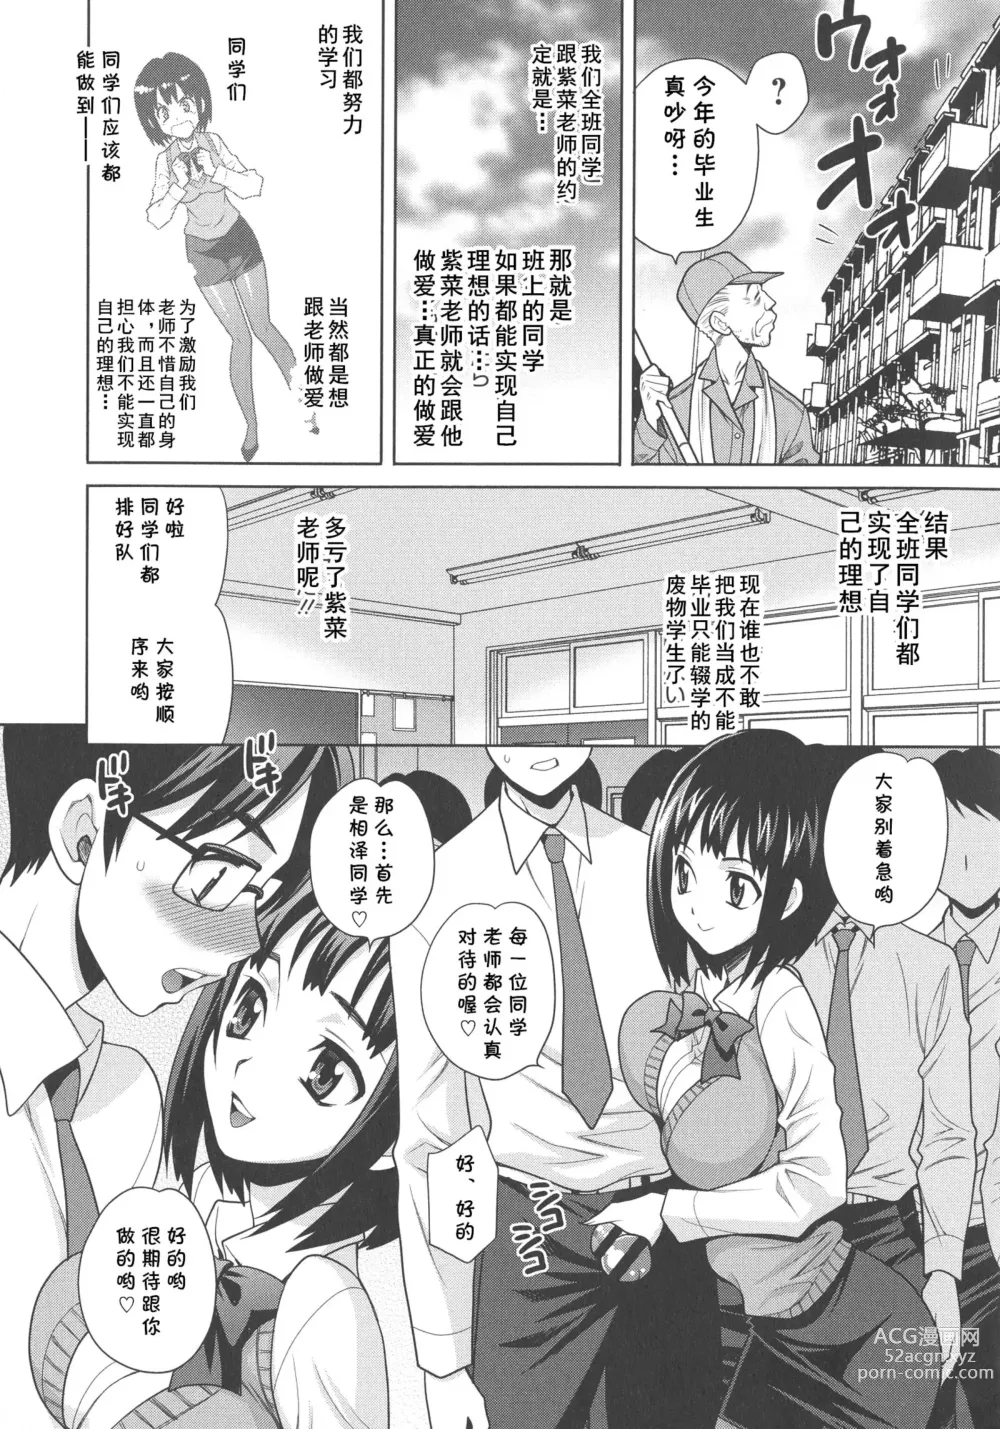 Page 5 of manga Sayonara Nori-chan Sensei